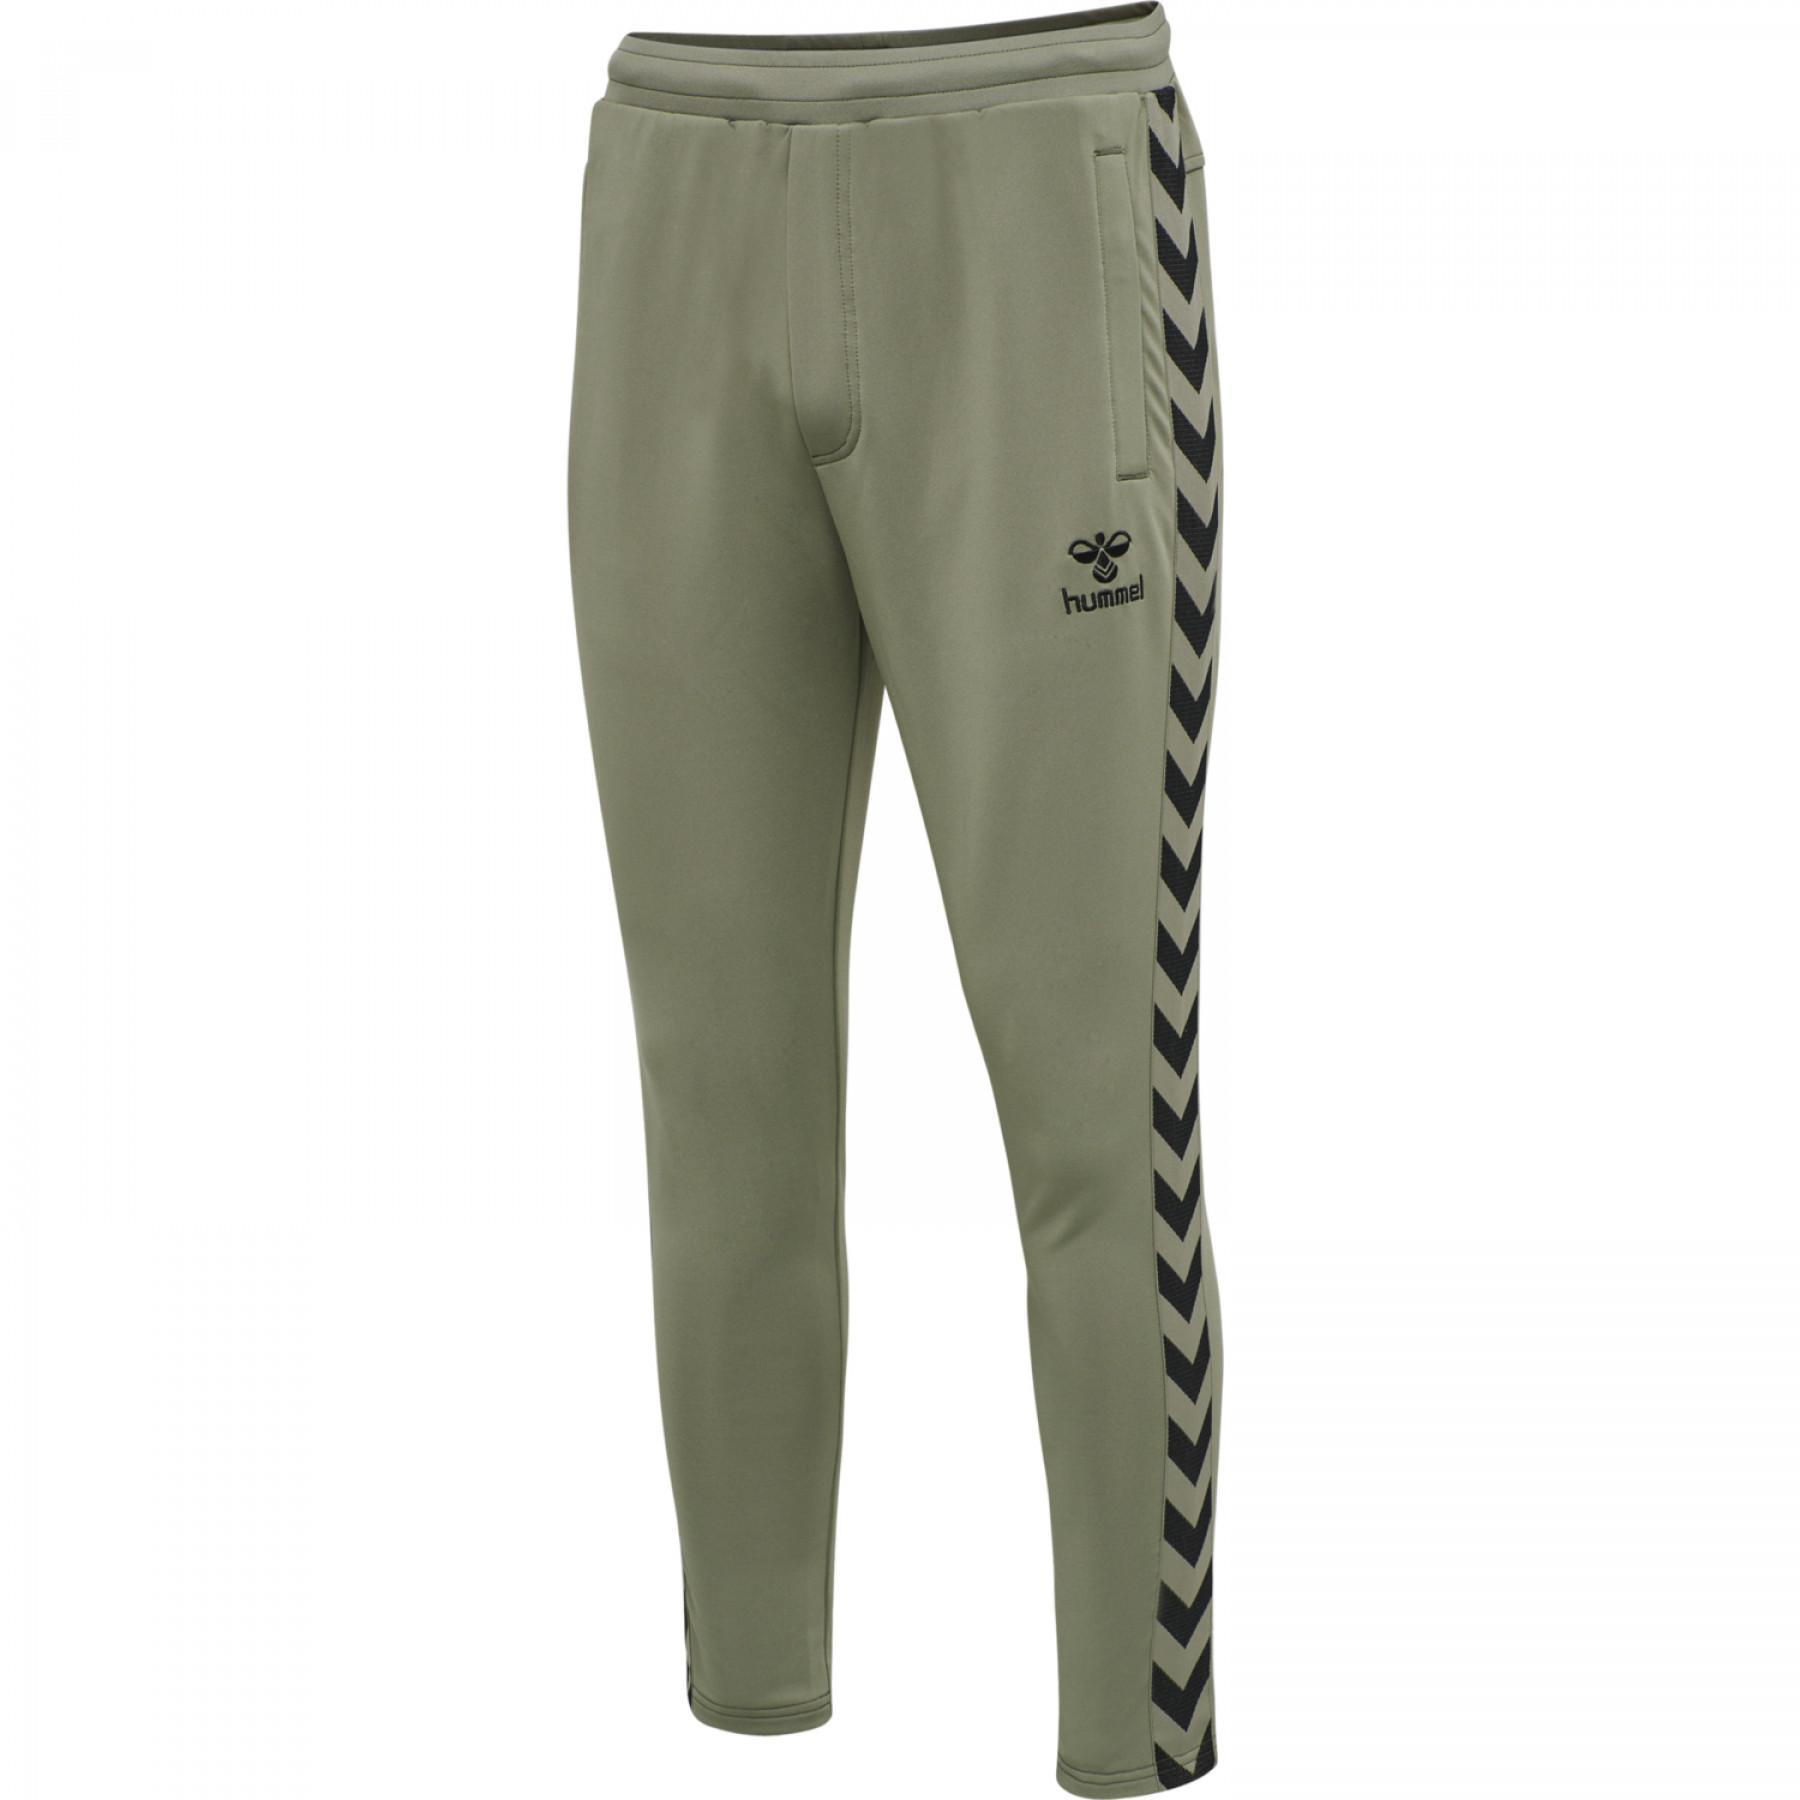 Pants Hummel HmlNATHAN 2.0 tapered - Textile - Handball wear